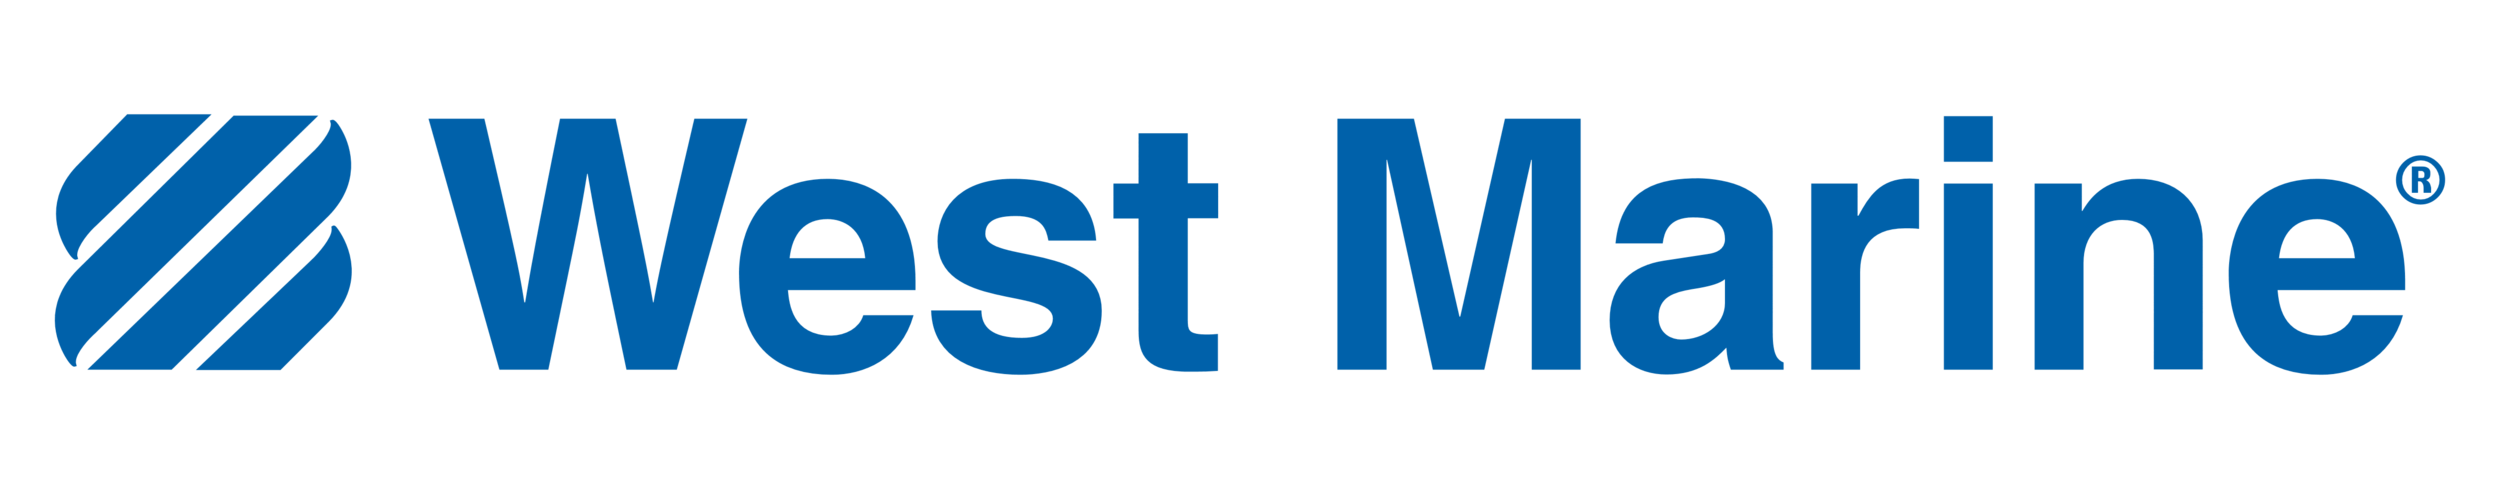 West_Marine_logo_logotype.png